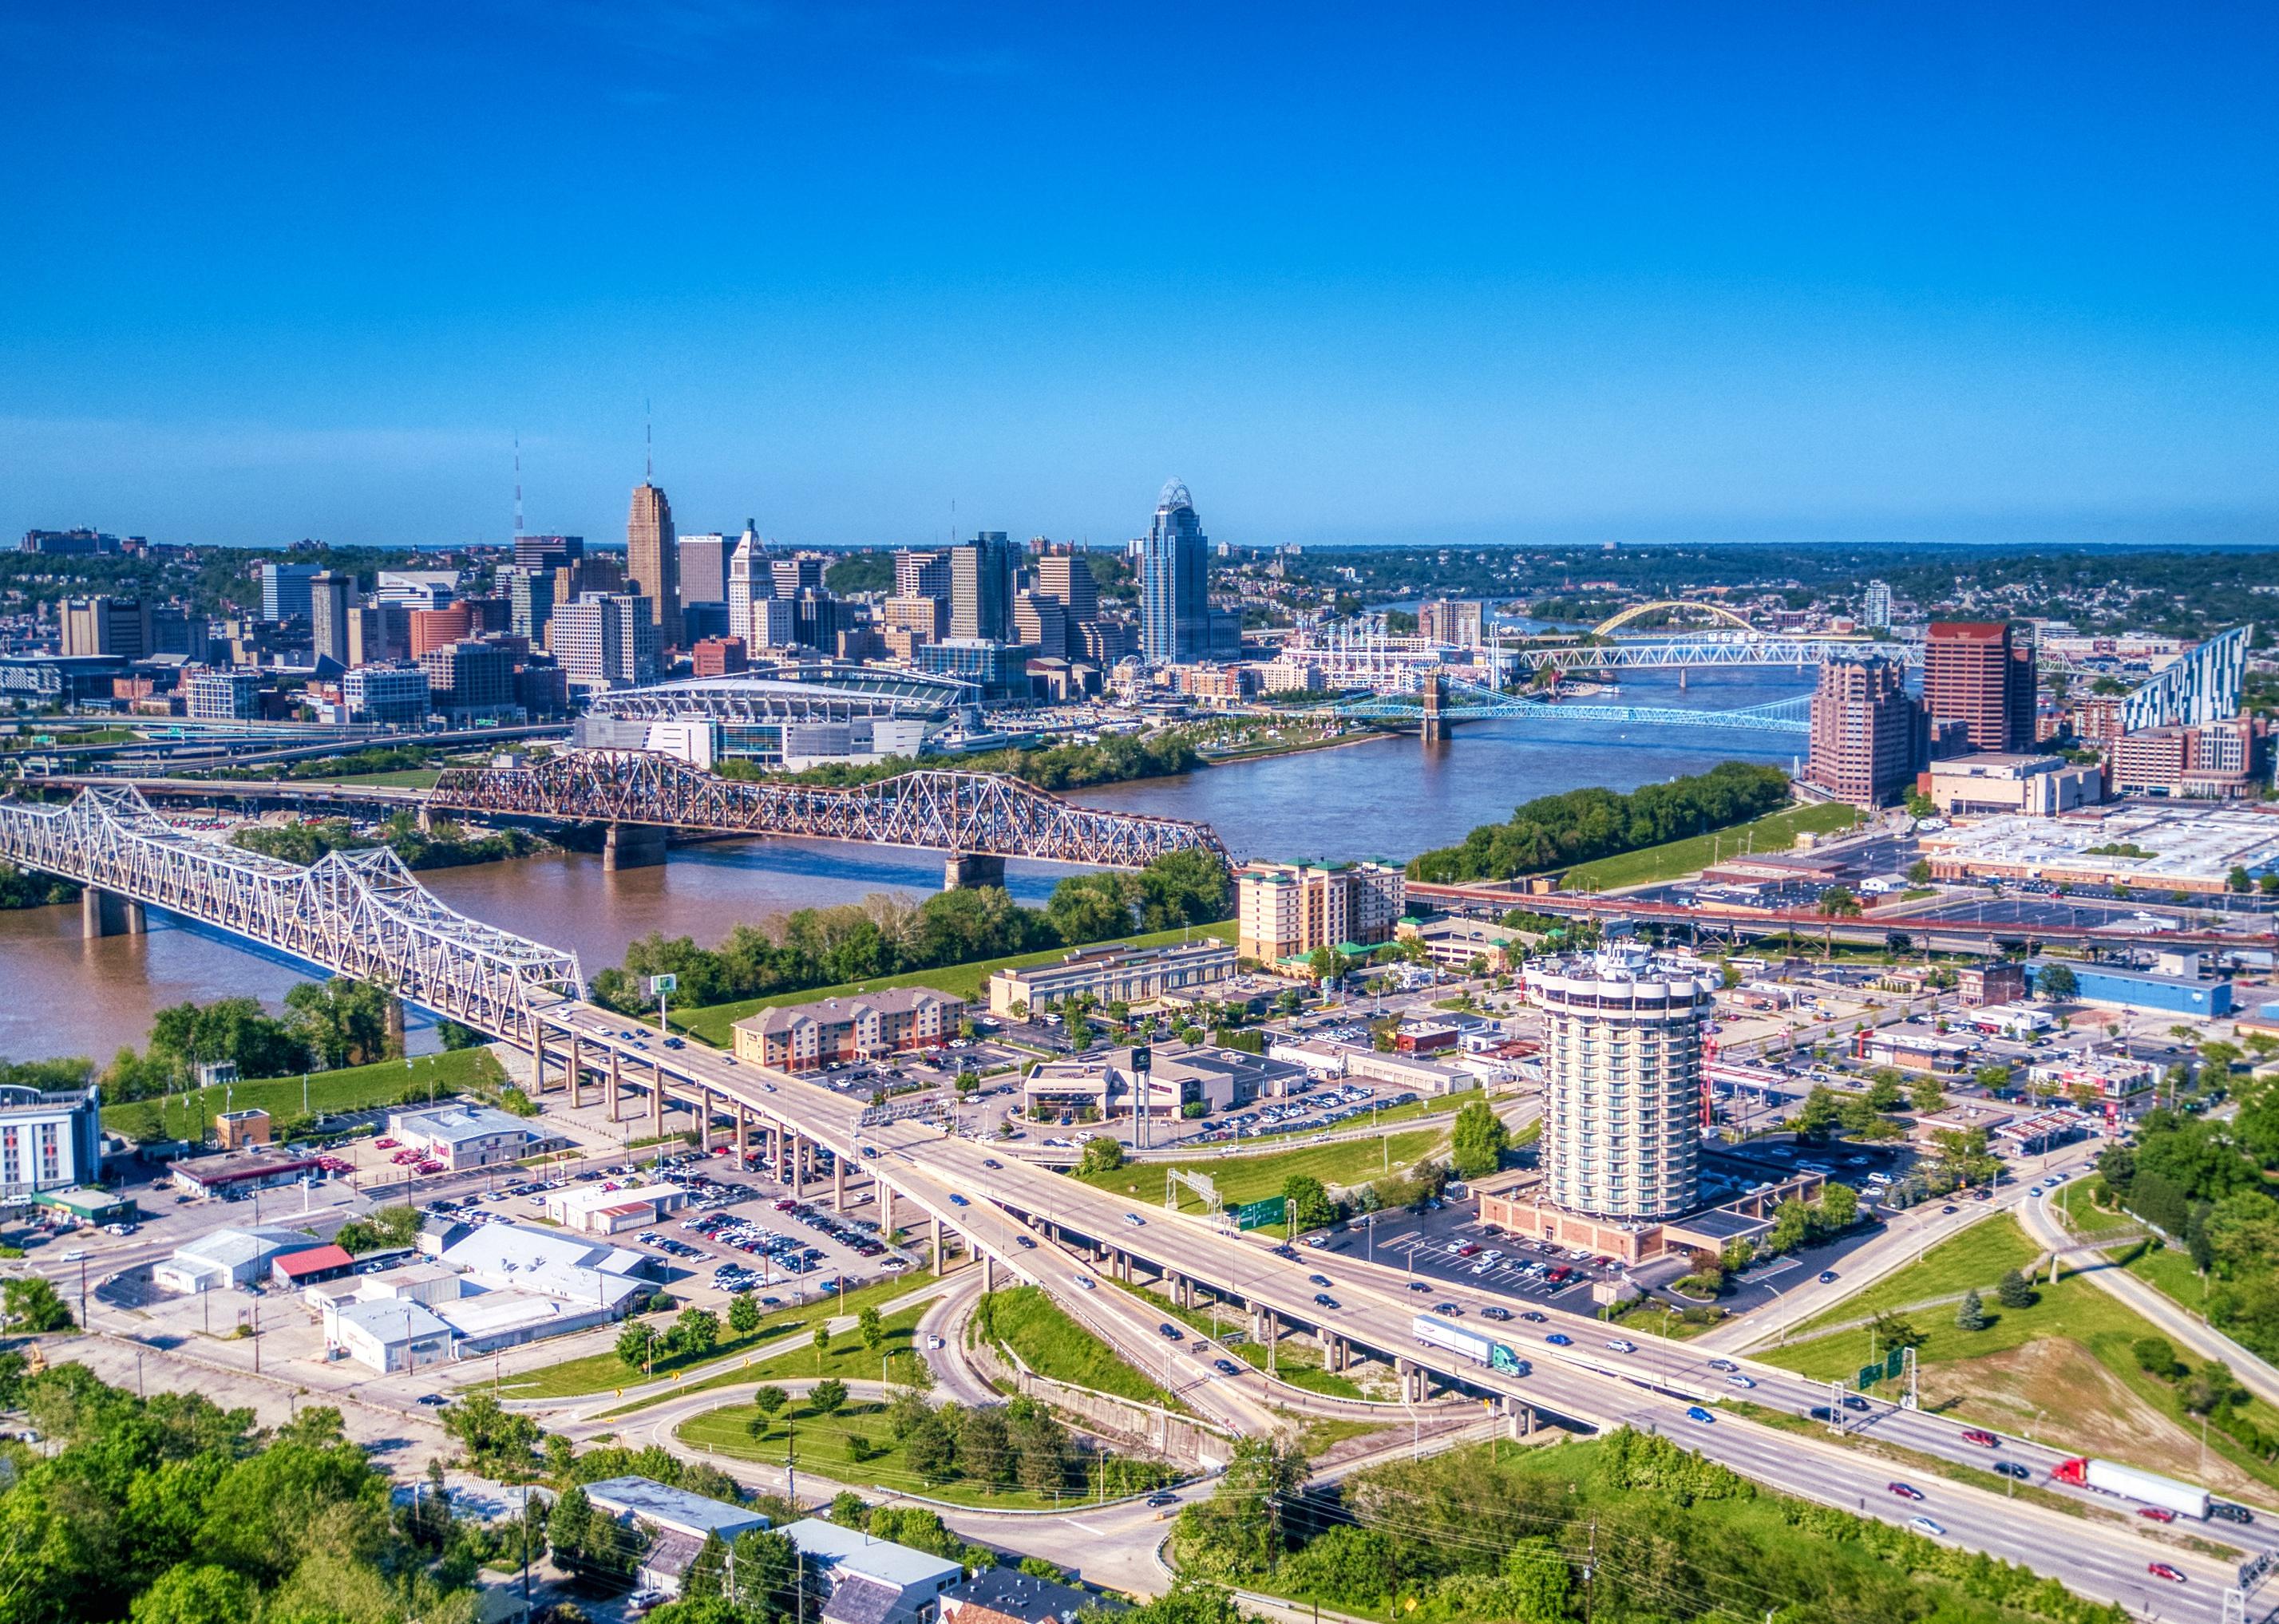 Aerial view of Covington and downtown Cincinnati from Devou Park.